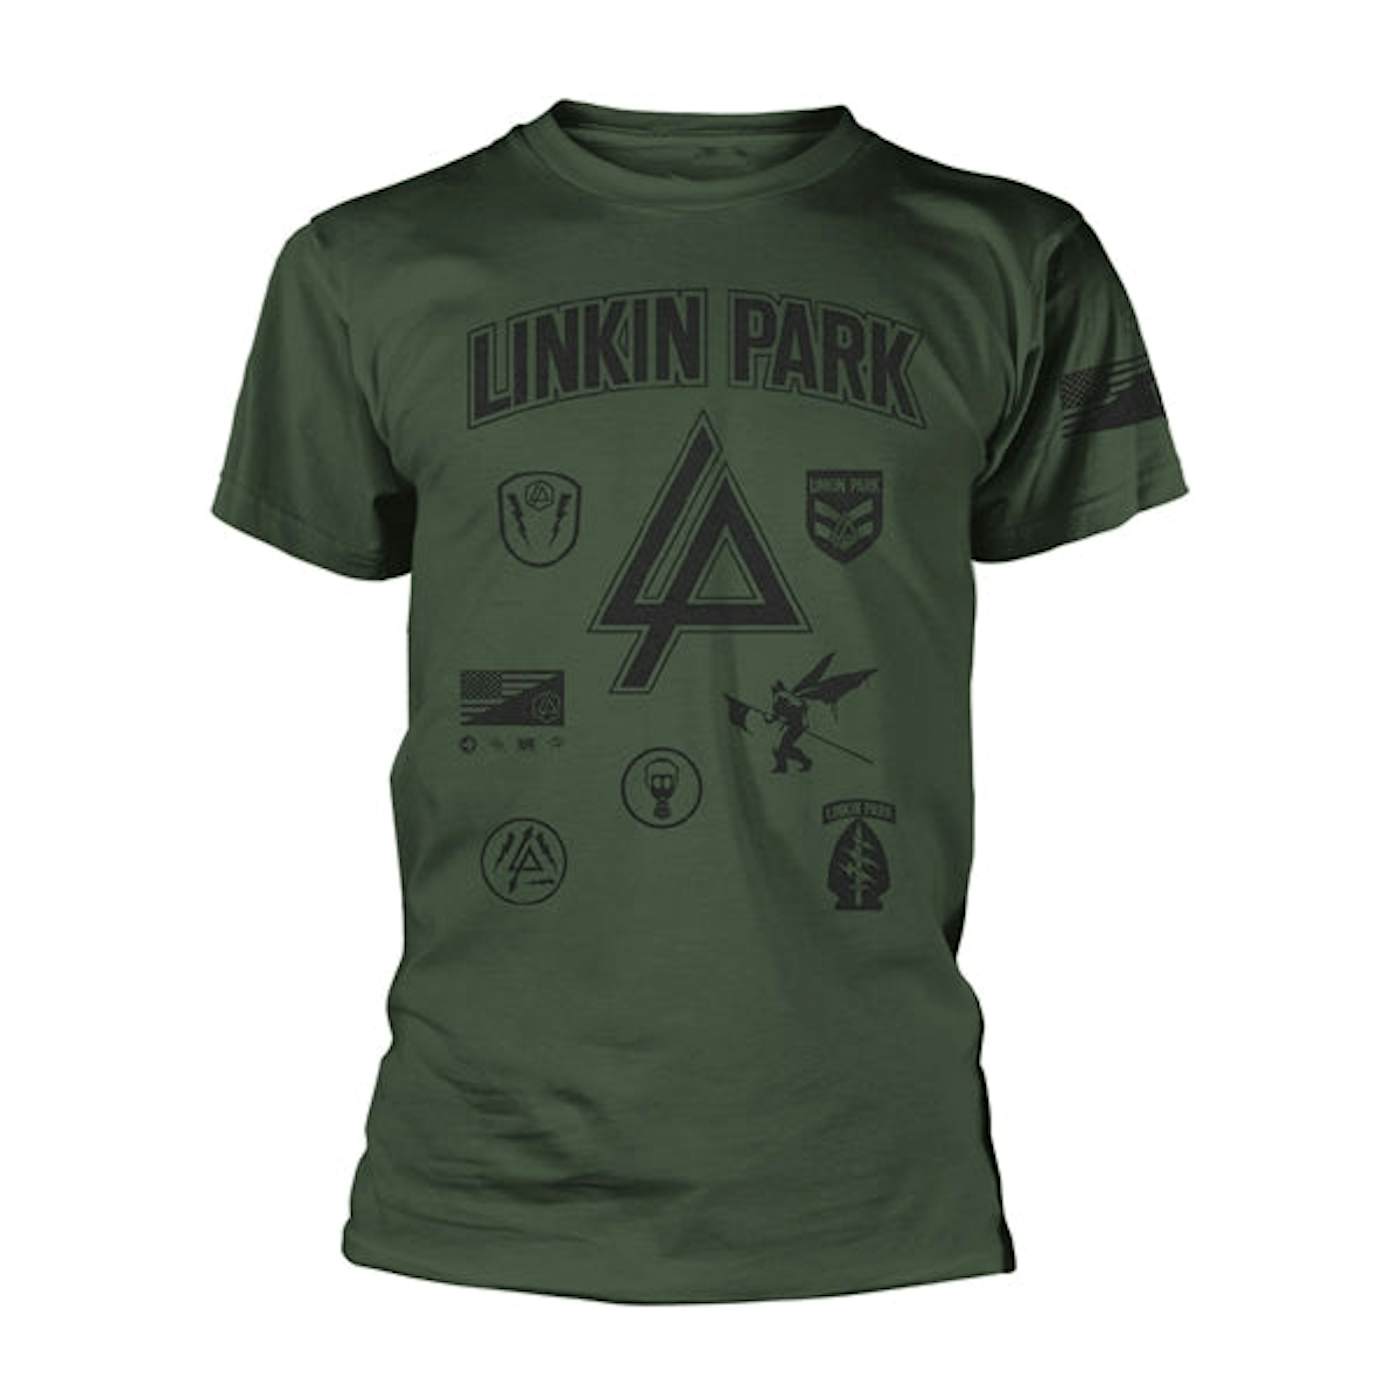 Linkin Park T Shirt - Patches